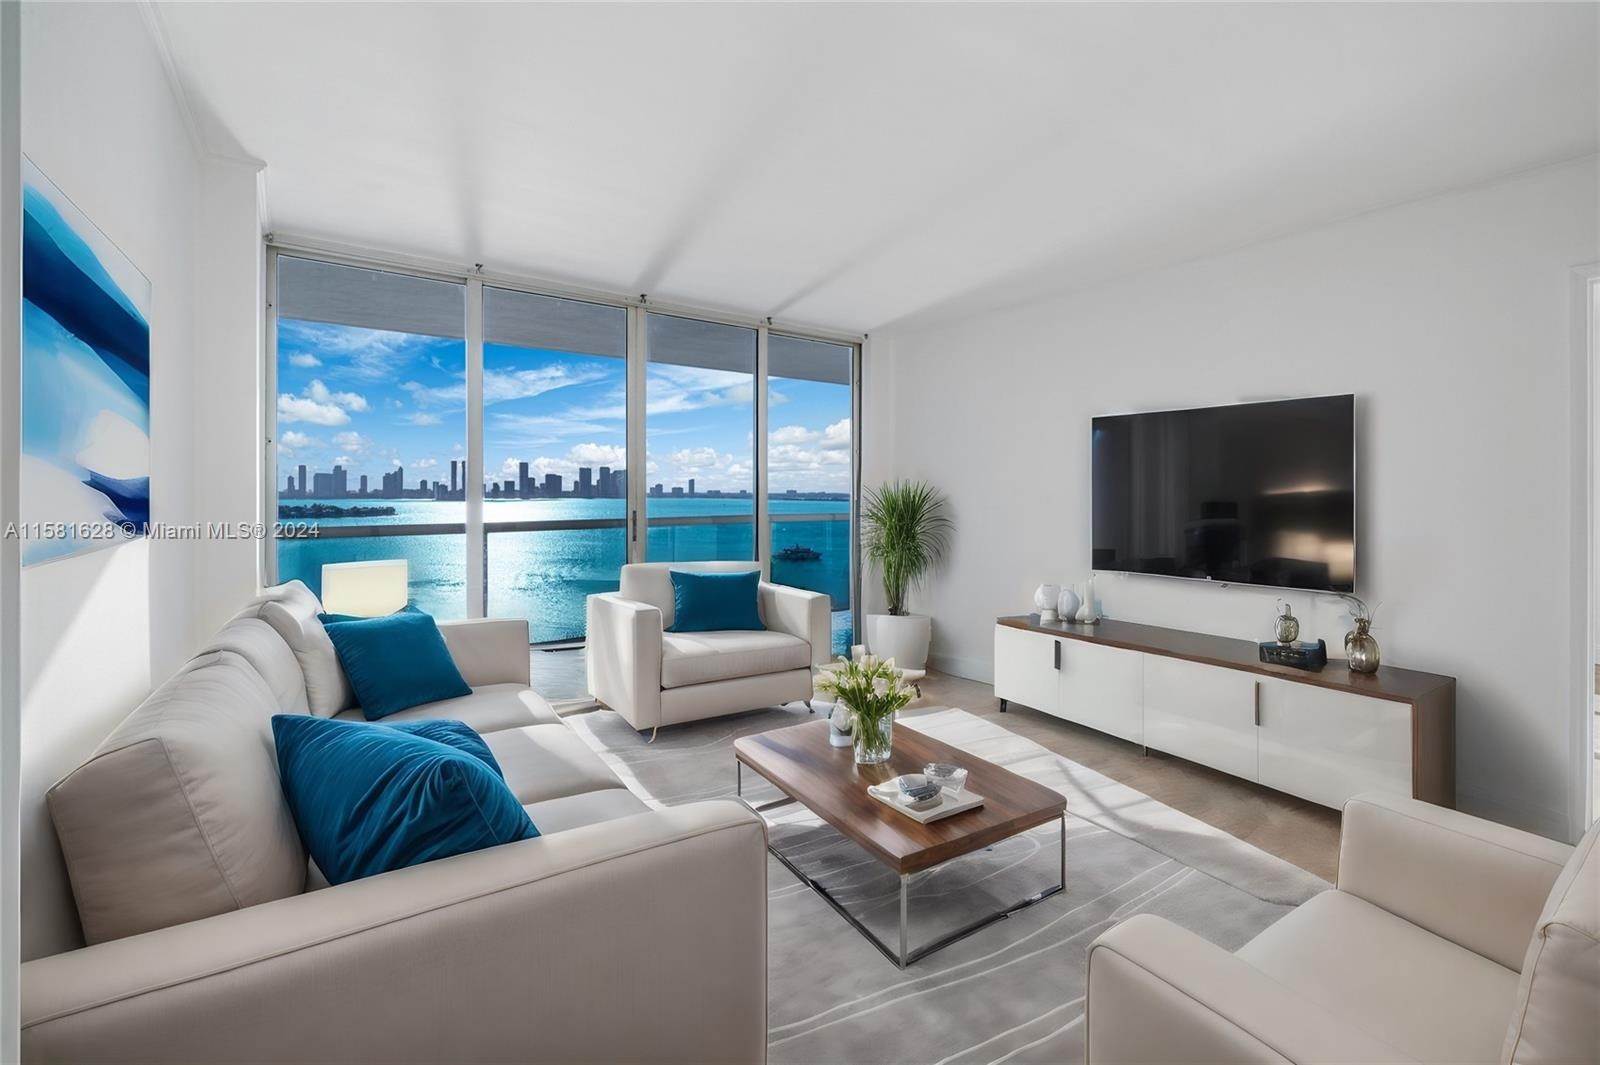 Condominium for Sale at Mid Beach, Miami Beach, FL 33139